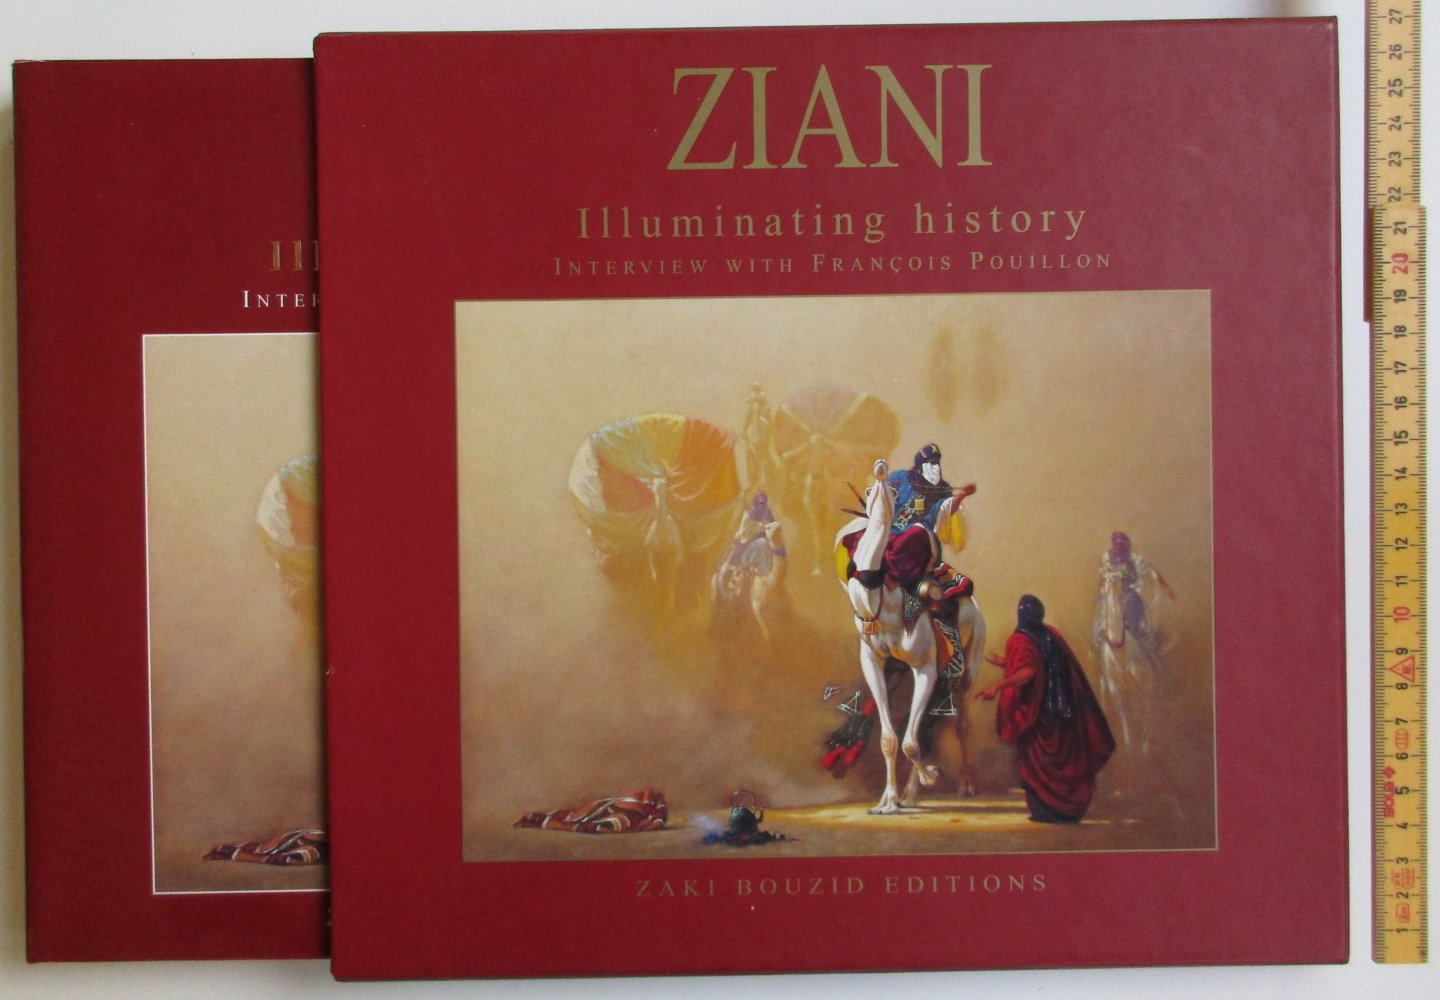 Ziani - Illuminating history